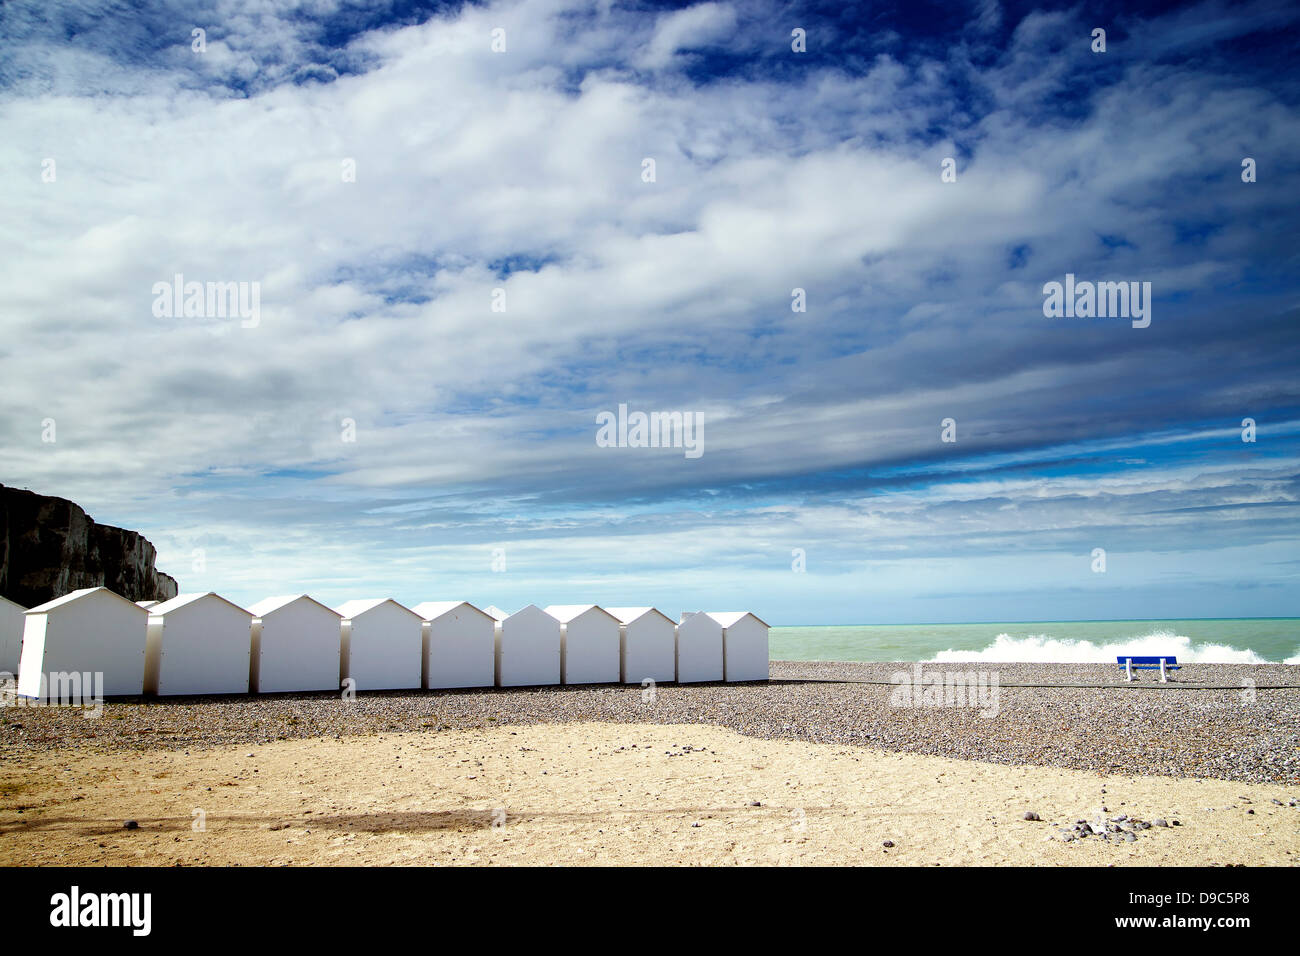 White beach huts in a row on shingle beach Stock Photo